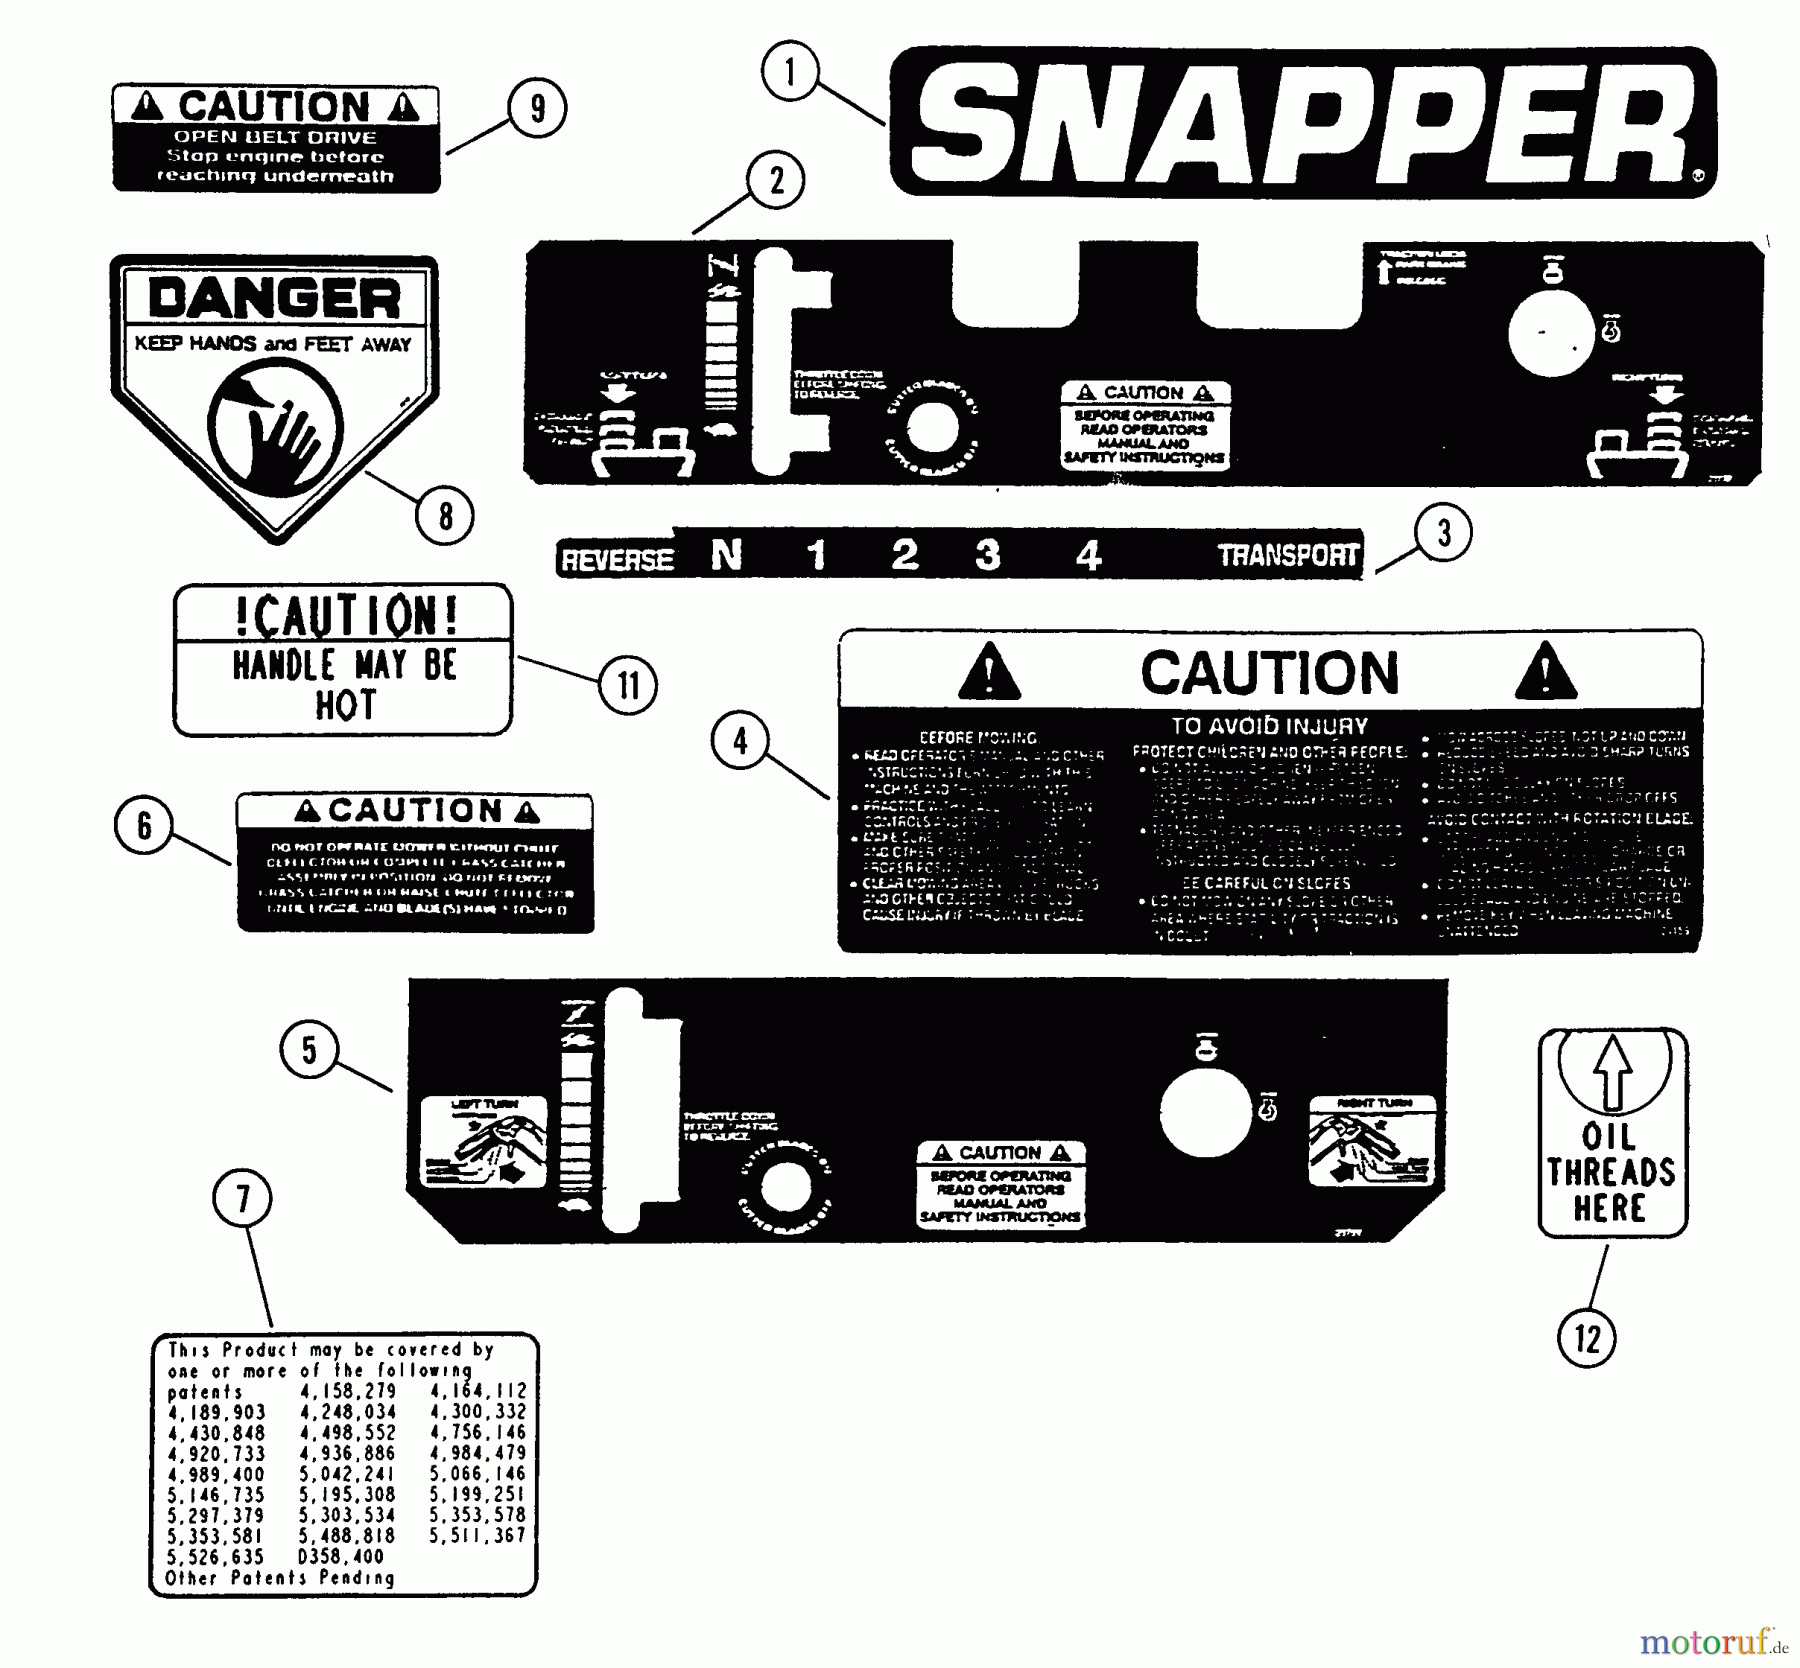  Snapper Rasenmäher für Großflächen SPP140KH - Snapper Wide-Area Walk-Behind Mower, 14 HP, Gear Drive, Pistol Grip, Series 0 Decals